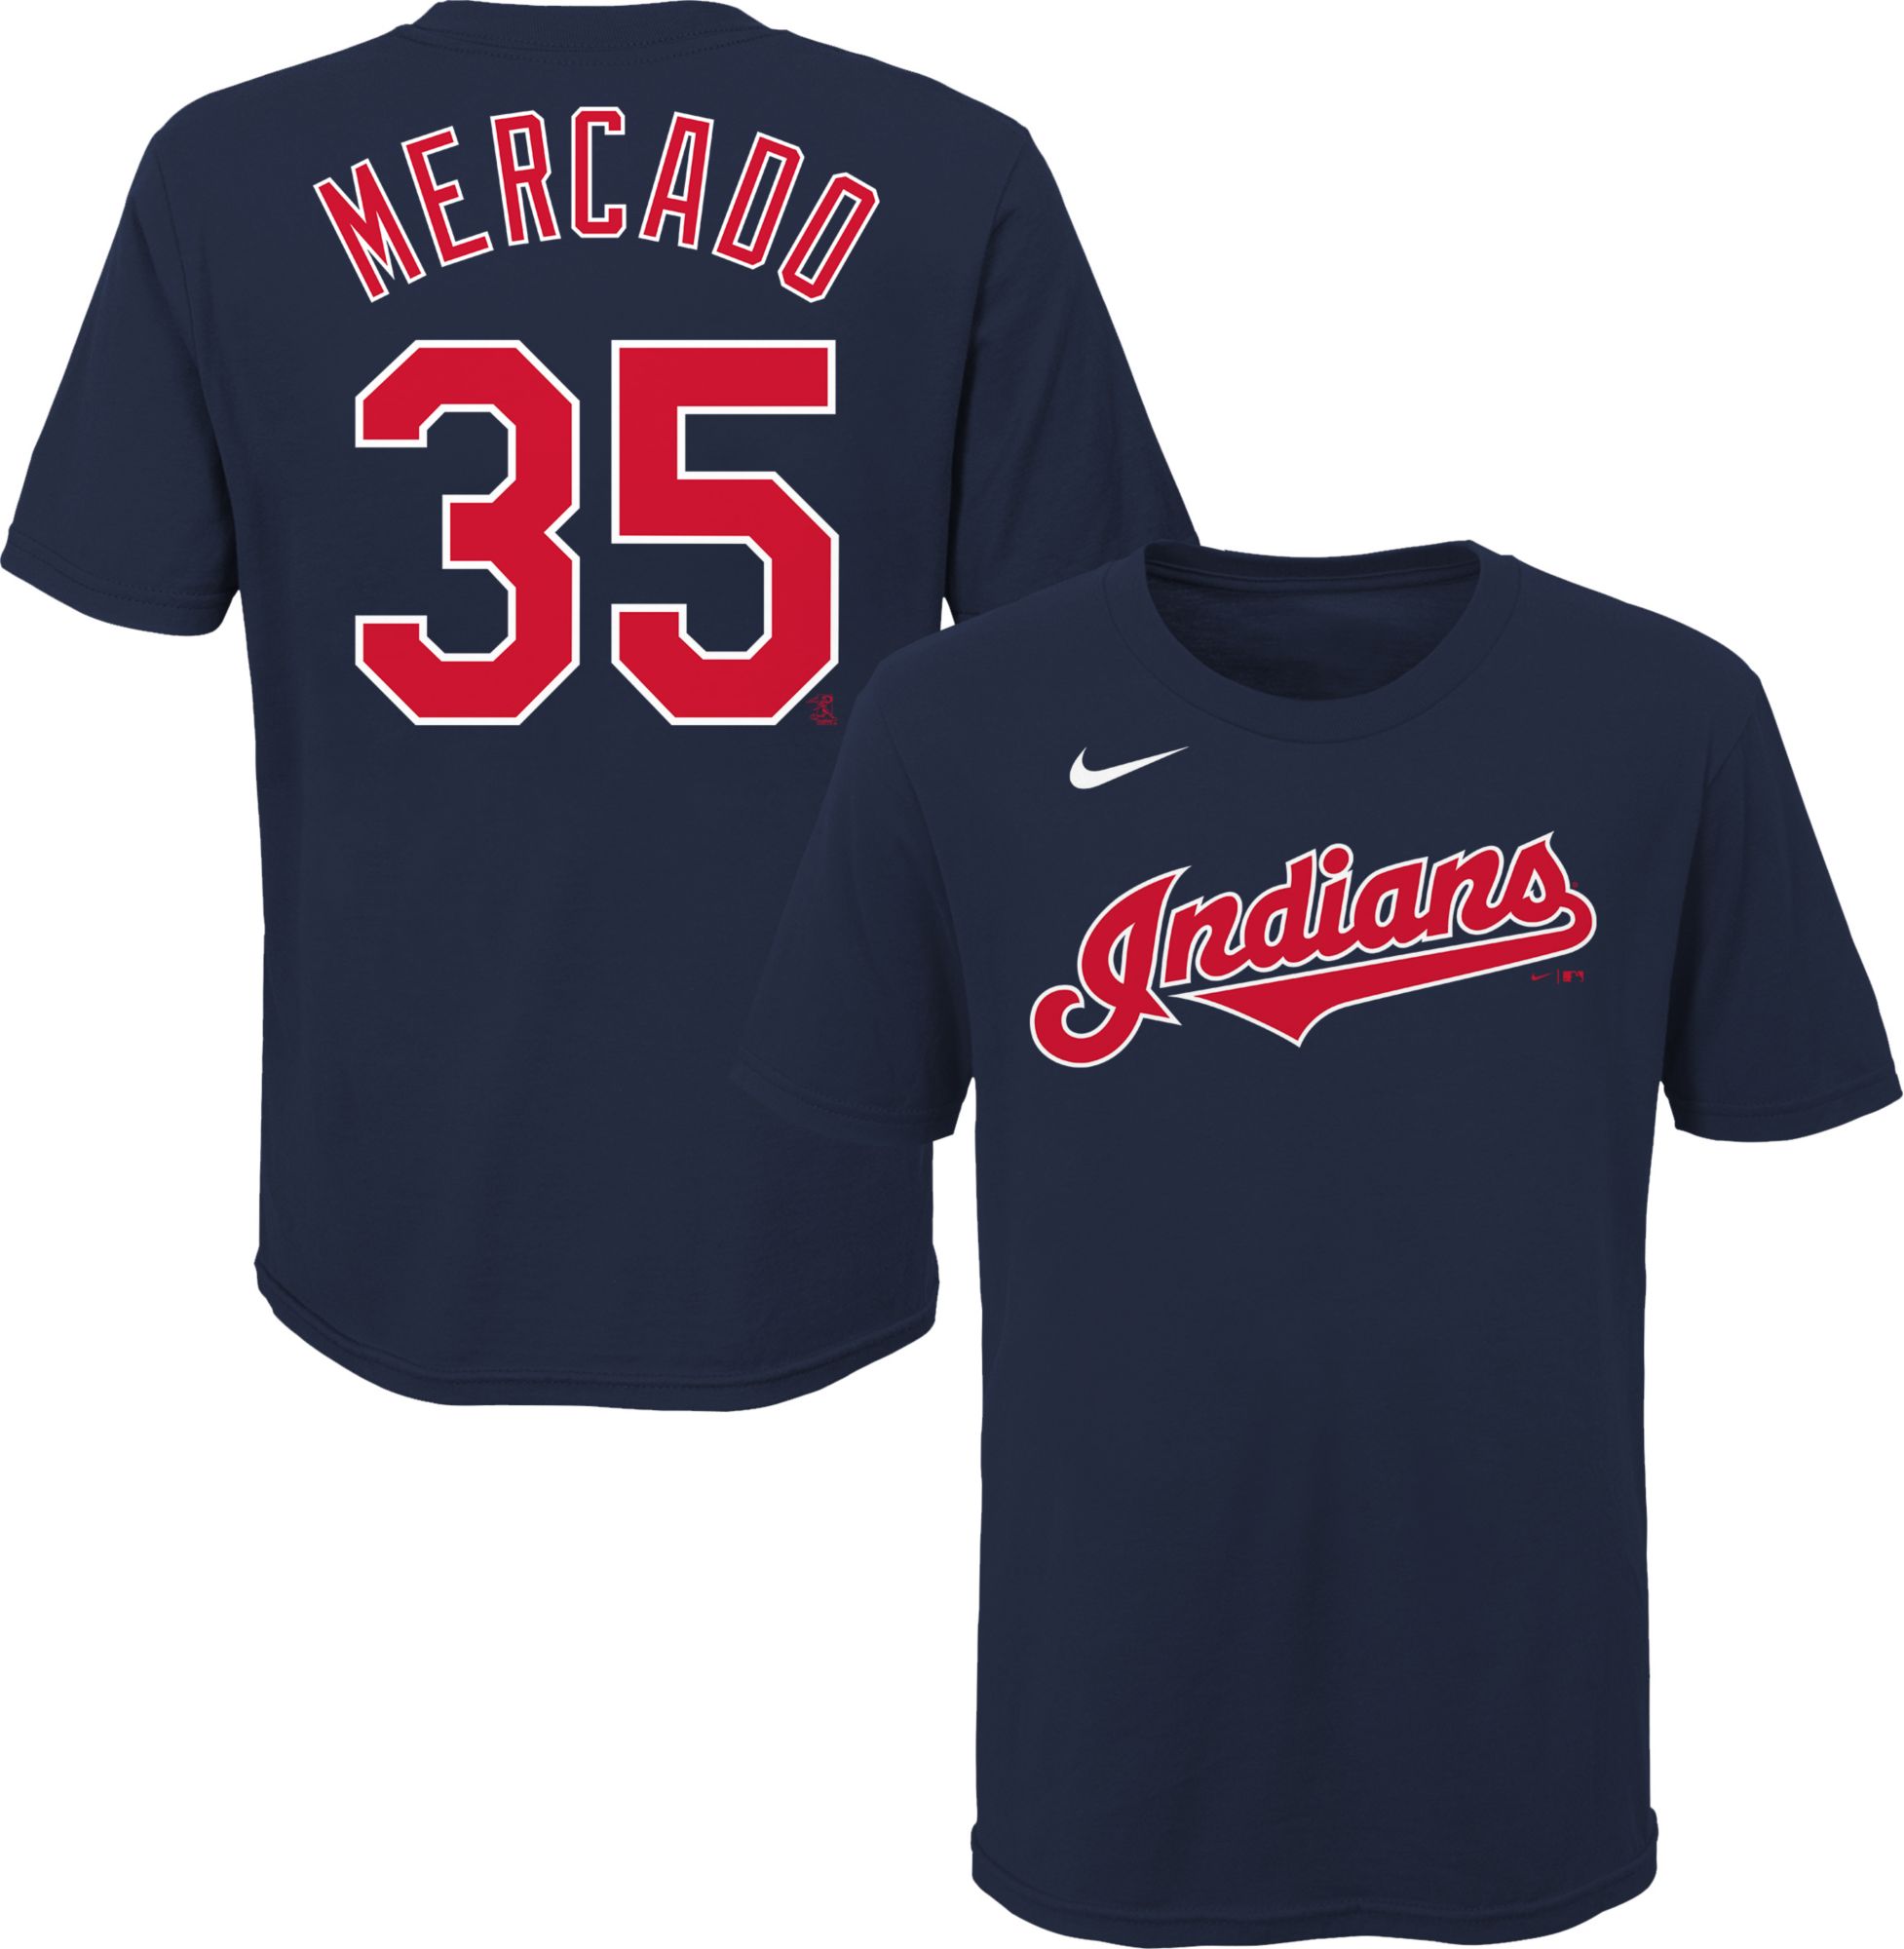 Nike / Youth Cleveland Indians Oscar Mercado #35 Navy T-Shirt